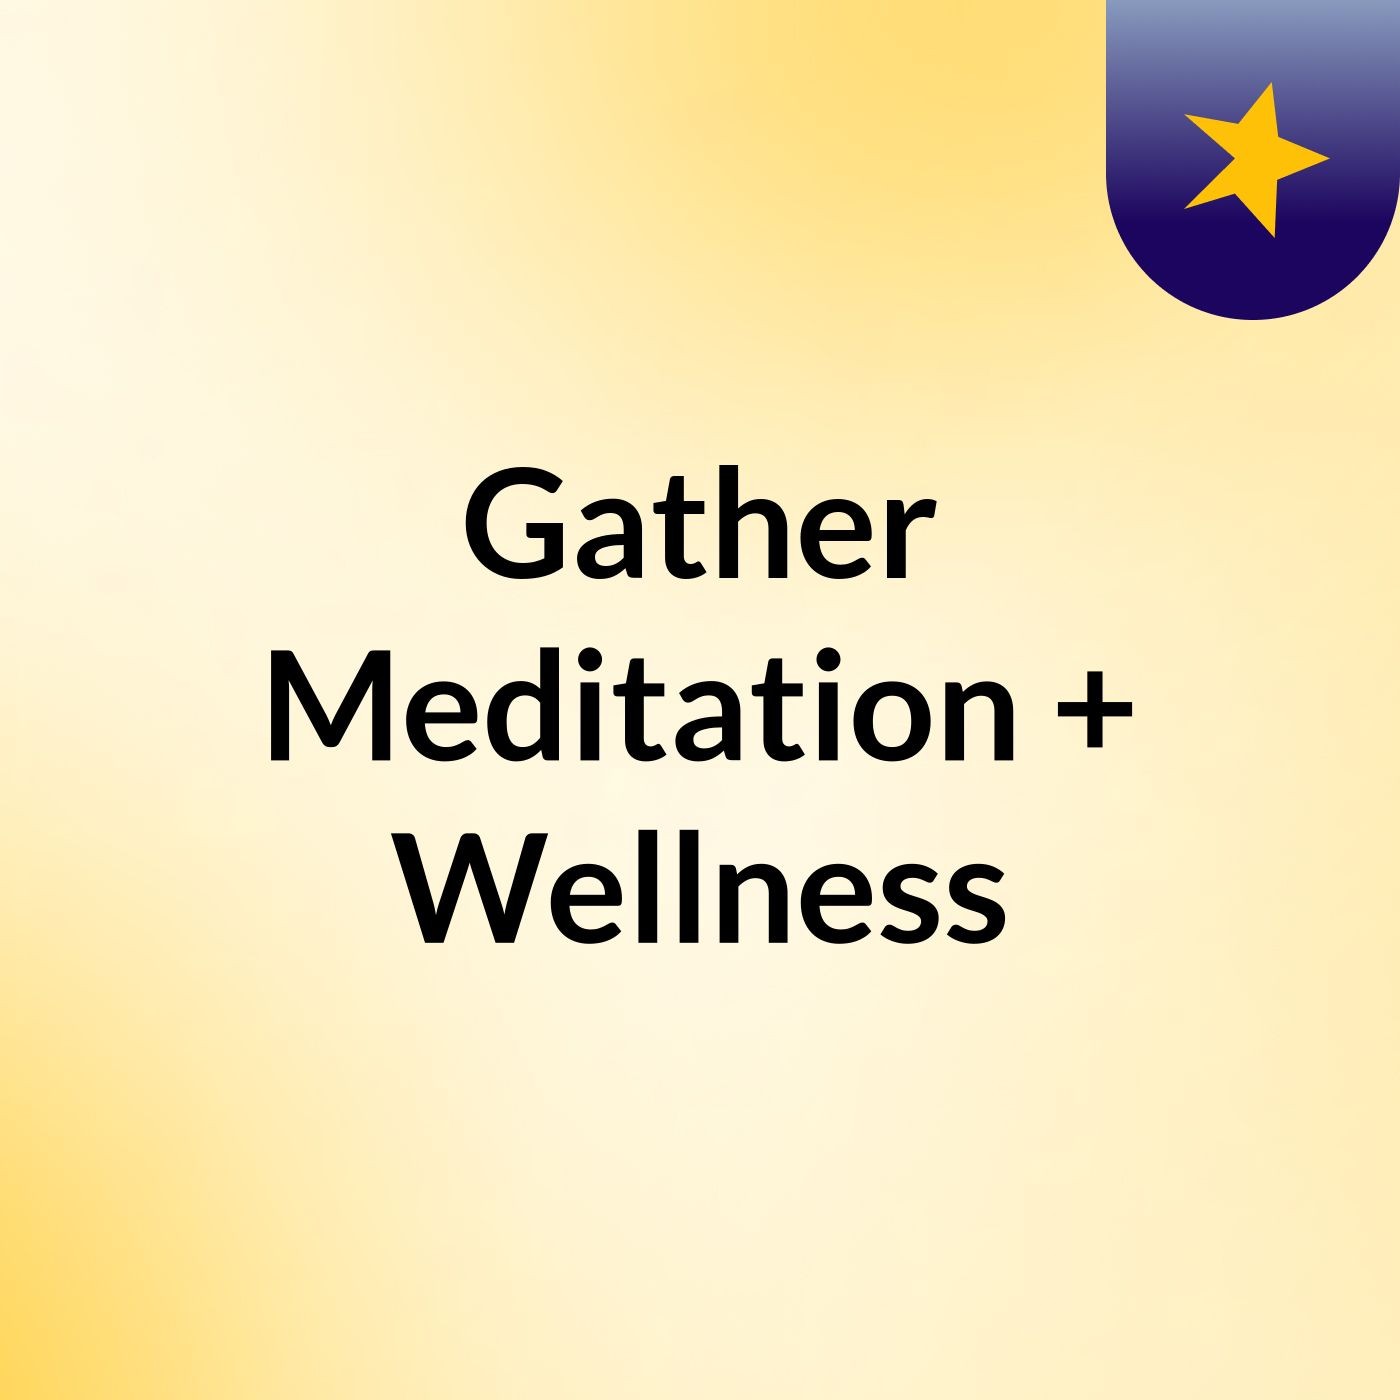 Gather Meditation + Wellness